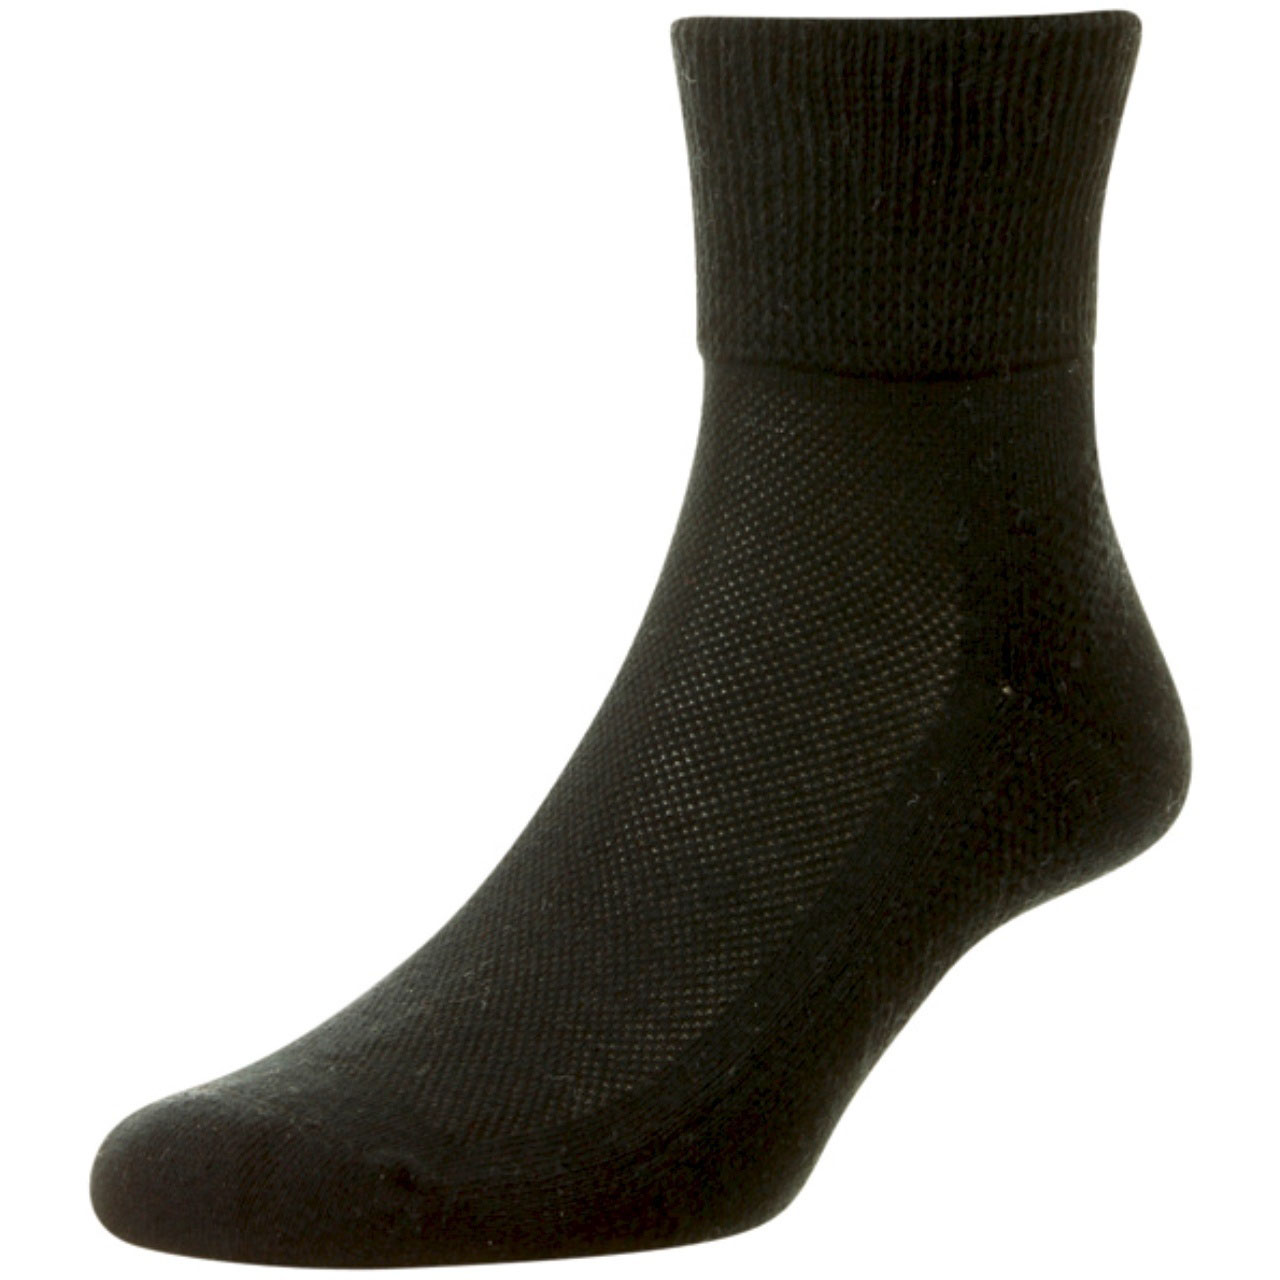 Low-Rise Soft Top Diabetic Socks - Pack of 2 pairs